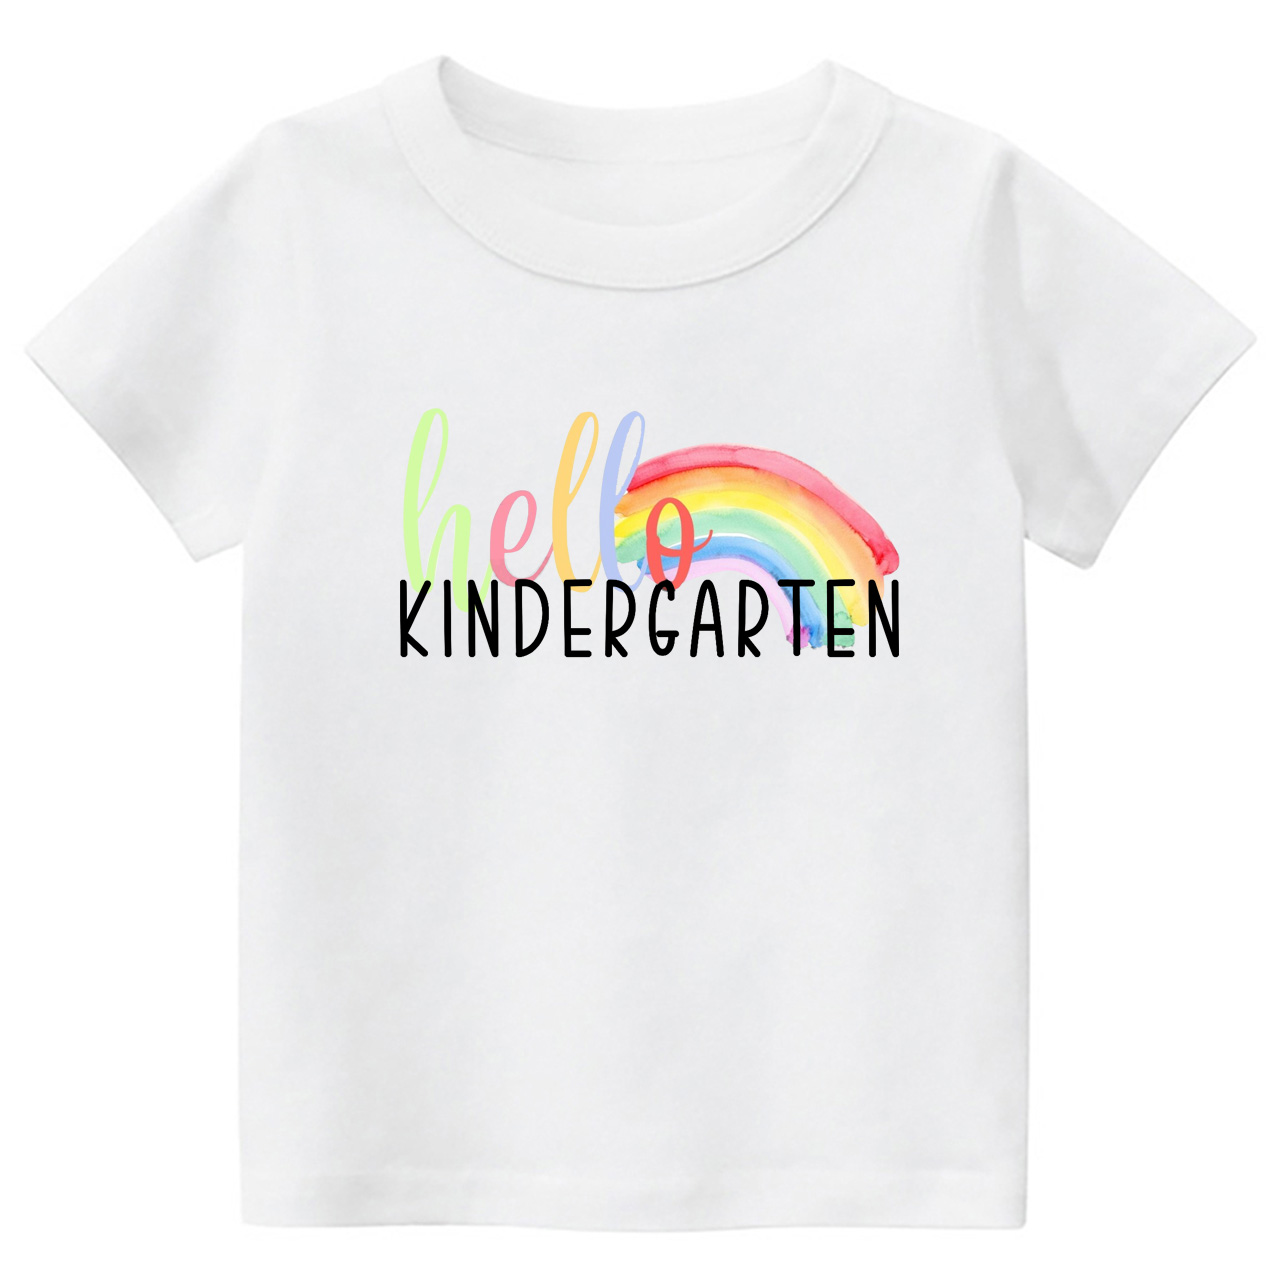 Hello Kindergarten Rainbow School Life Kids Shirts